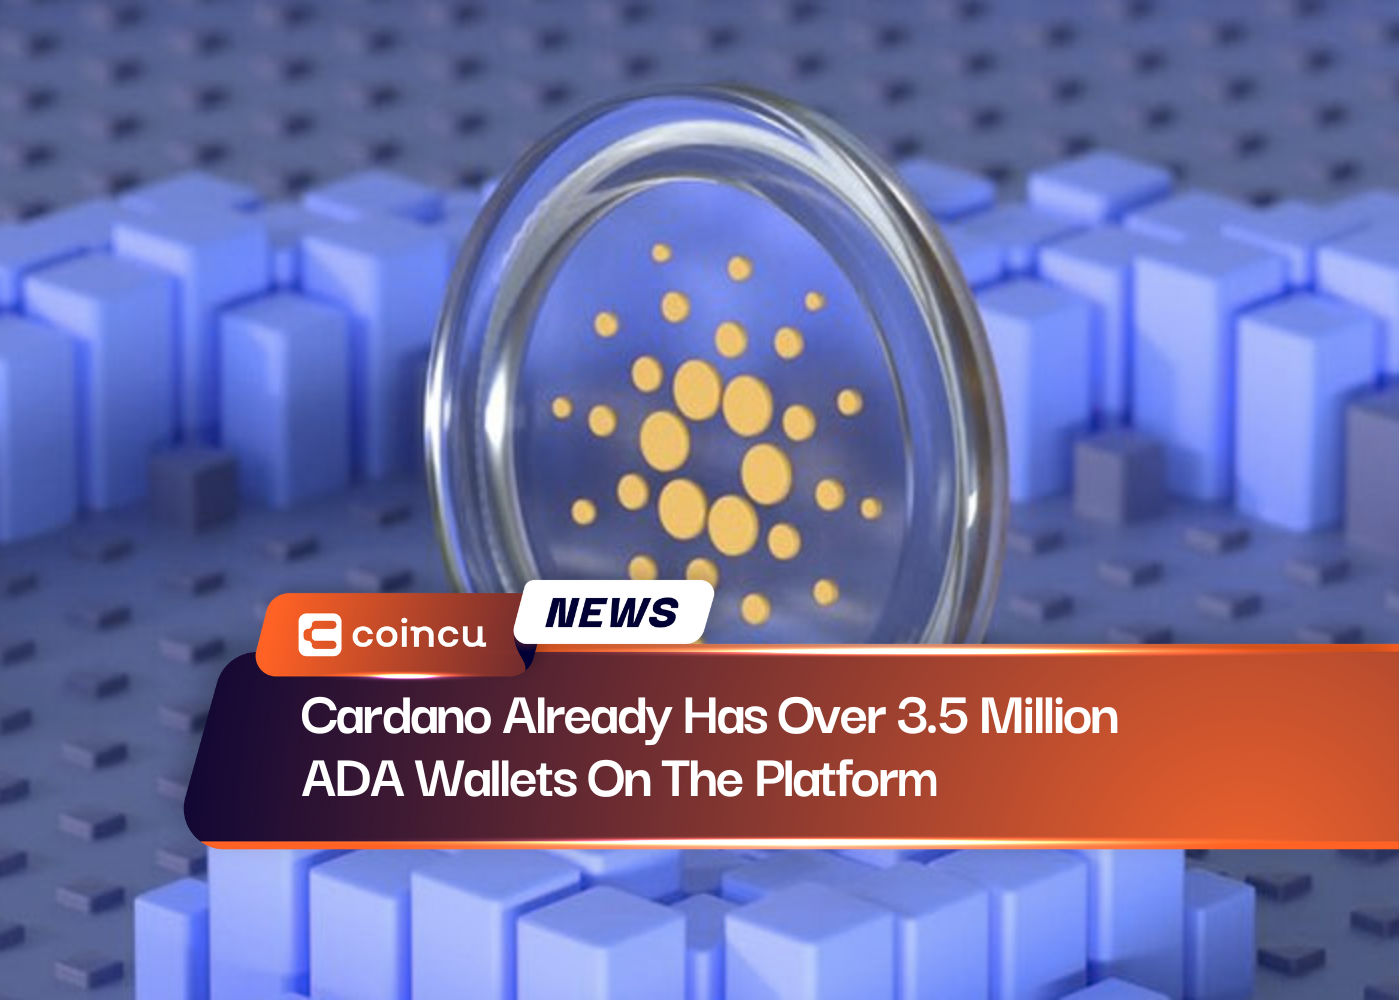 Cardano Already Has Over 3.5 Million ADA Wallets On The Platform